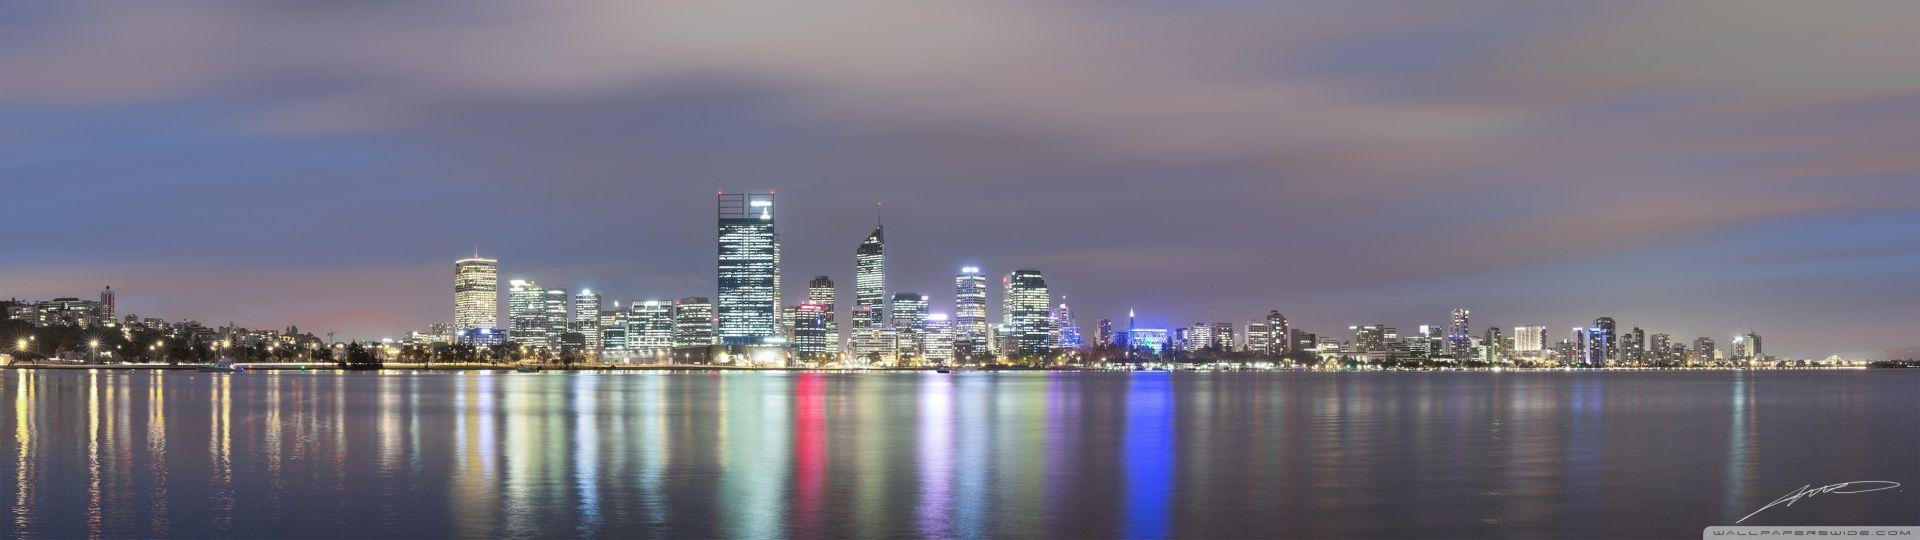 Perth by Night Panorama HD desktop wallpaper, Widescreen, High